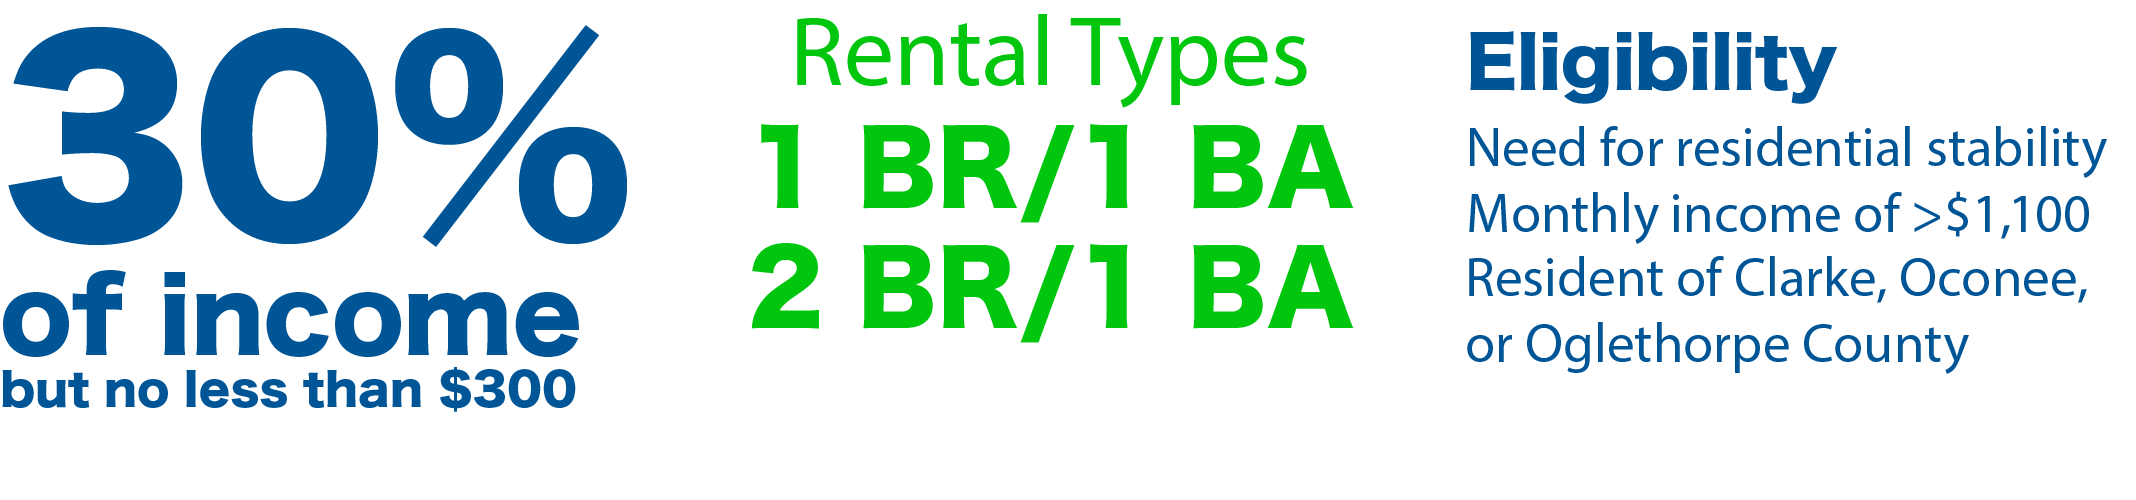 Rent details